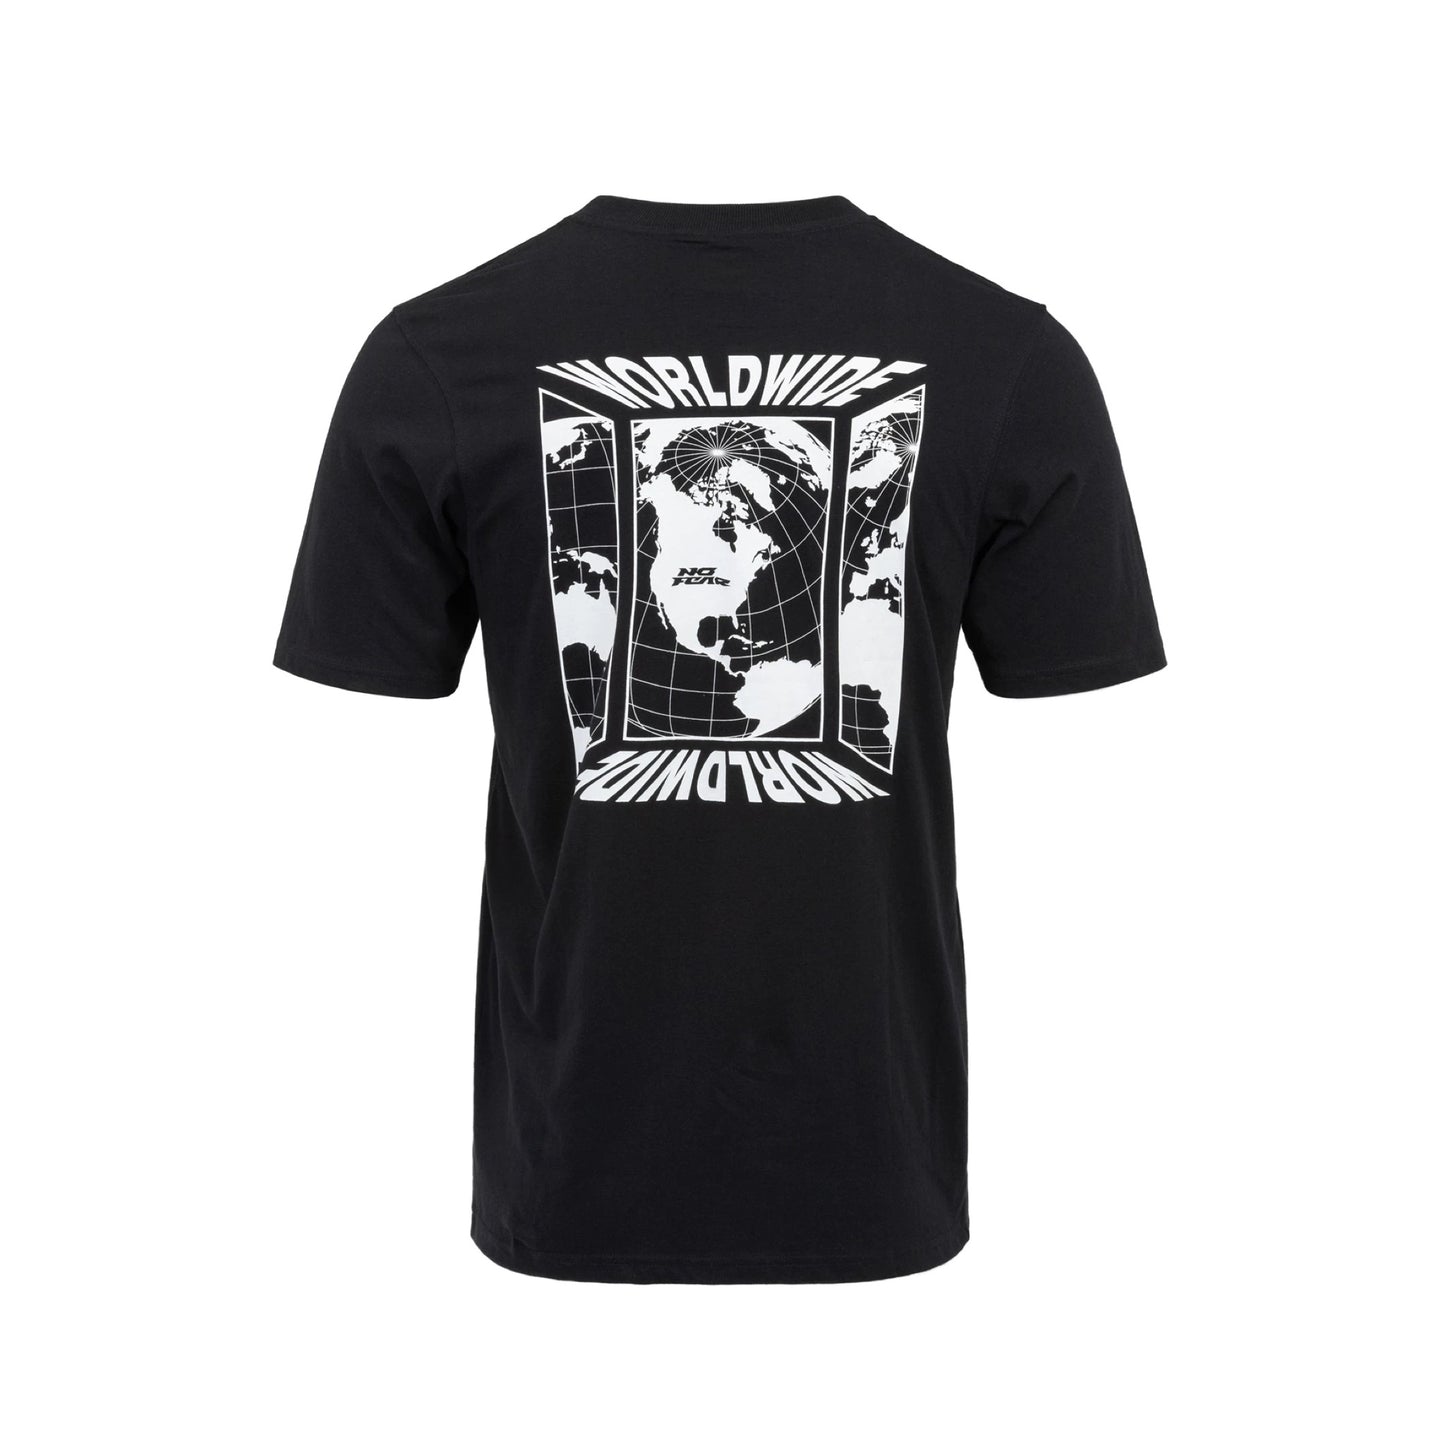 No Fear worldwide Backprint T-shirt in black